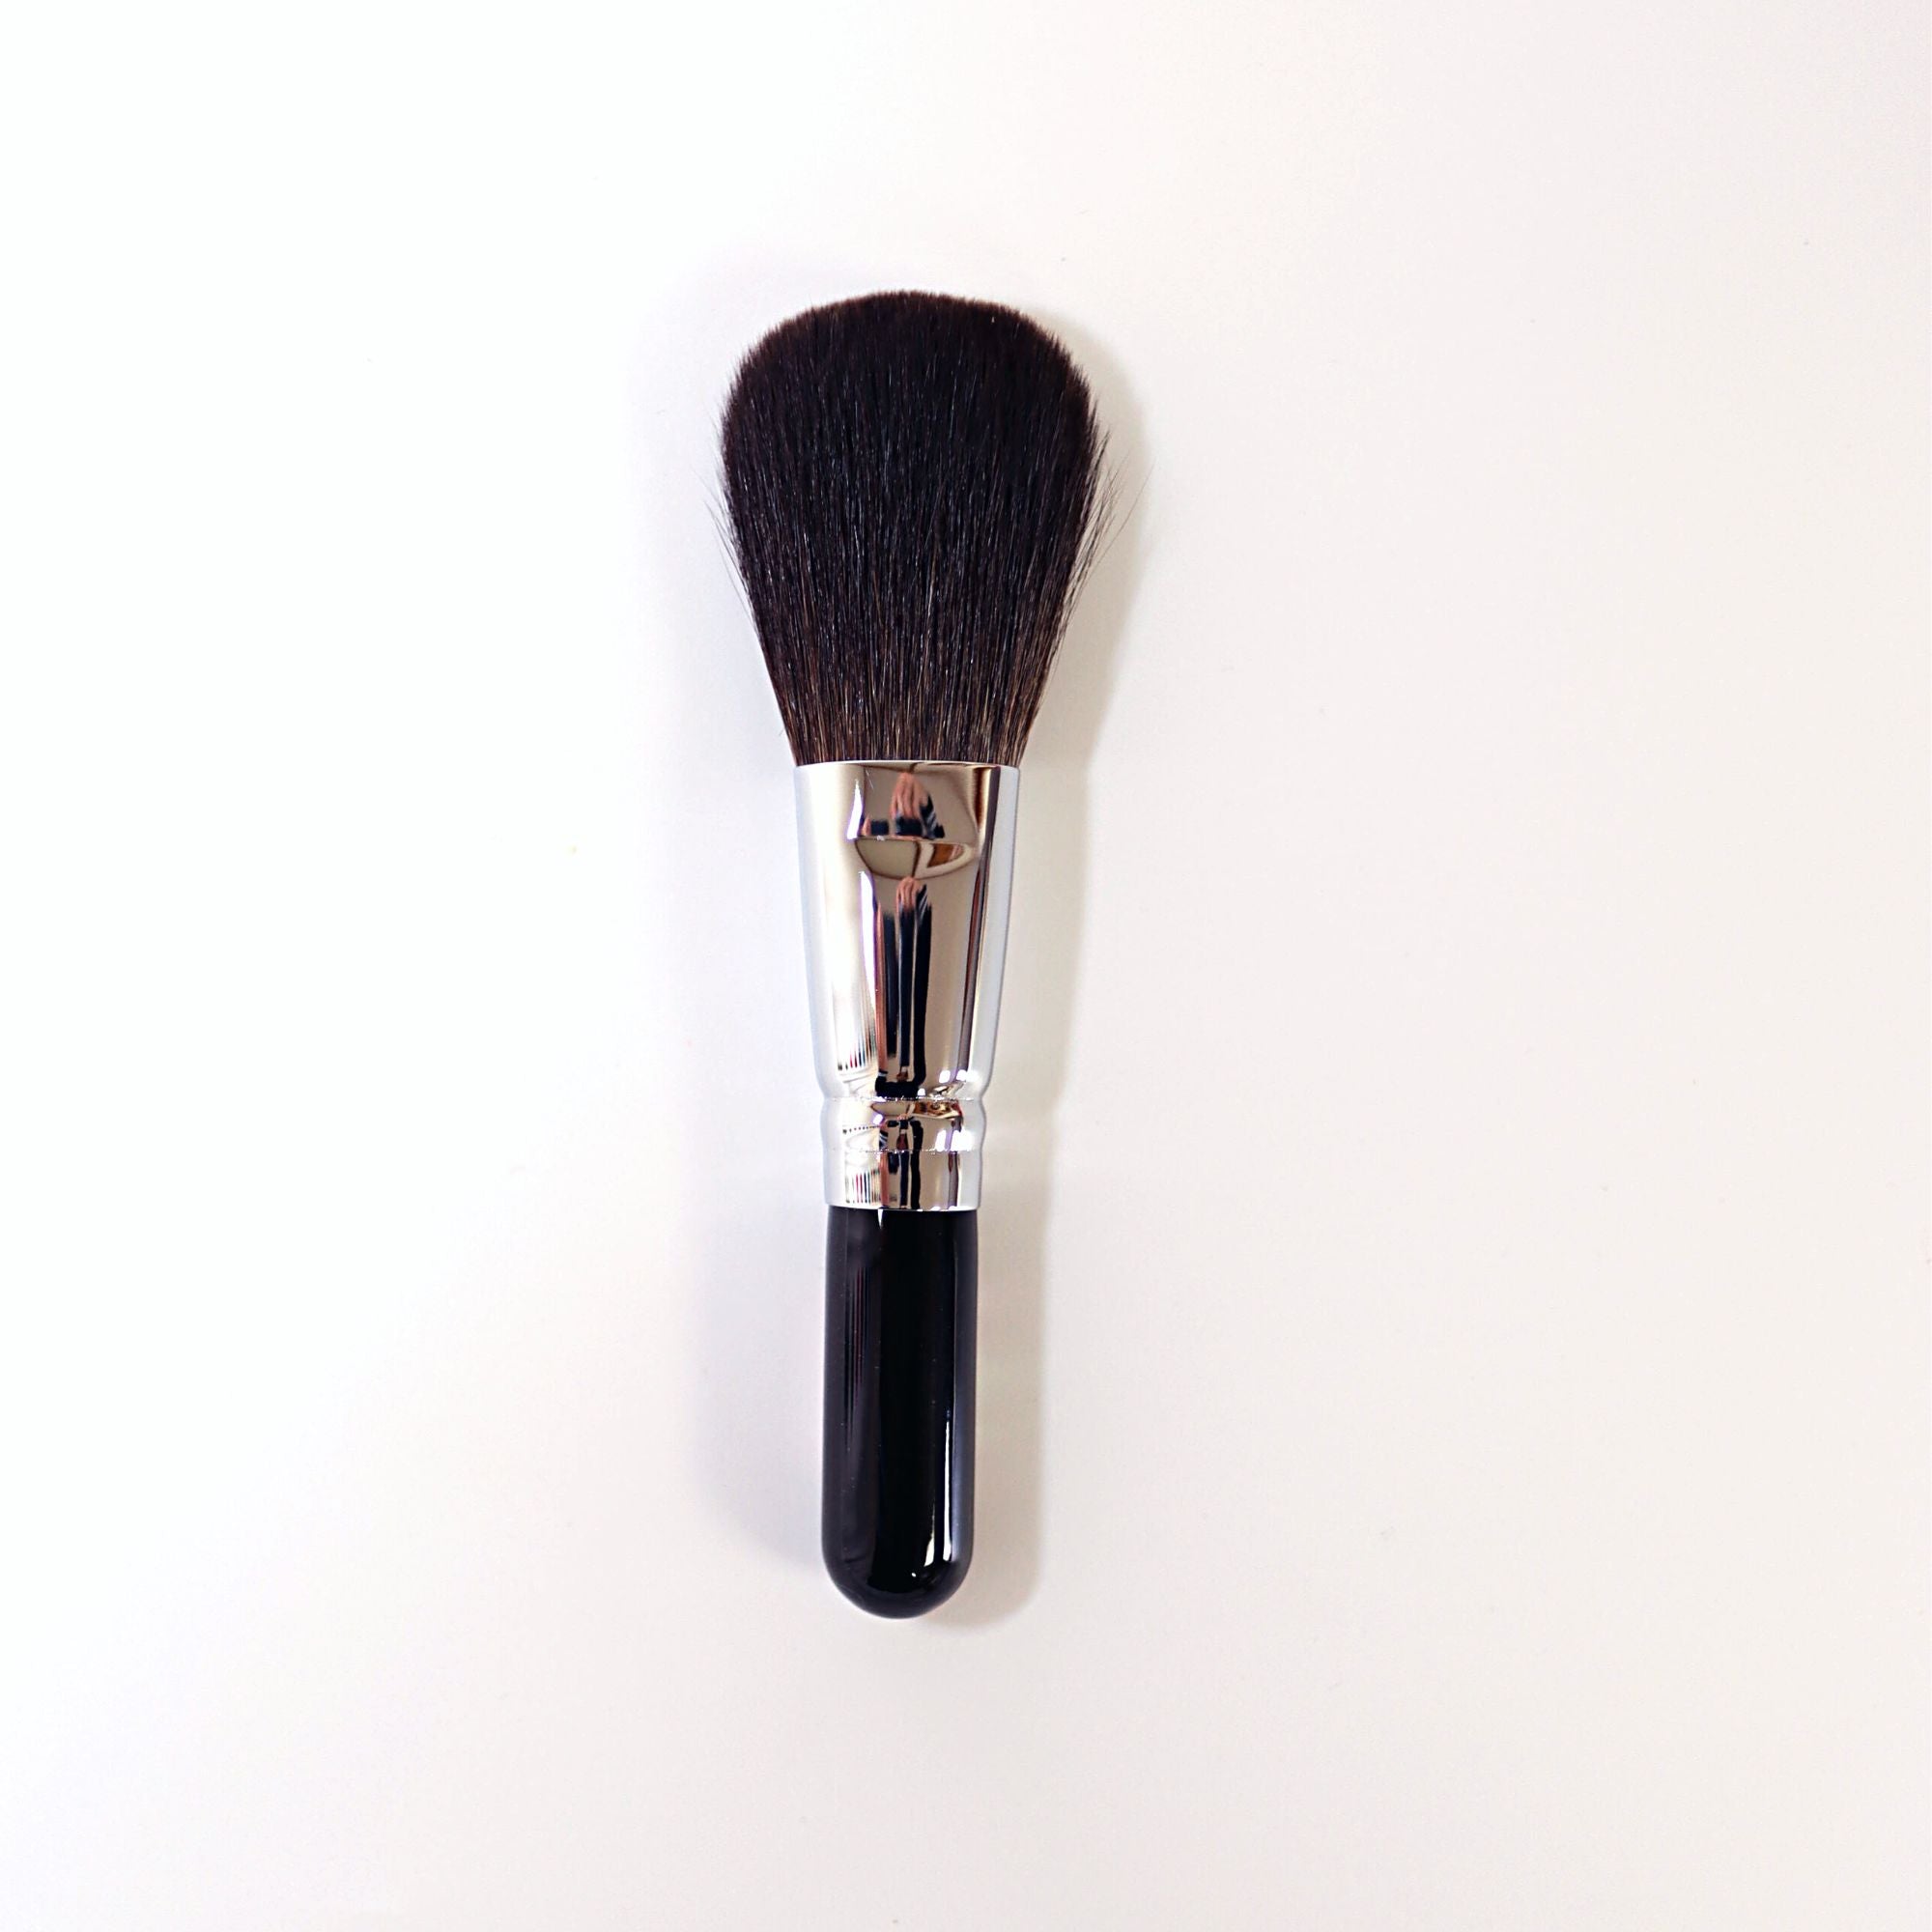 Eihodo RE20-2 Powder Brush Light Sakura うす桜, Makie Design (Limited Edition) - Fude Beauty, Japanese Makeup Brushes